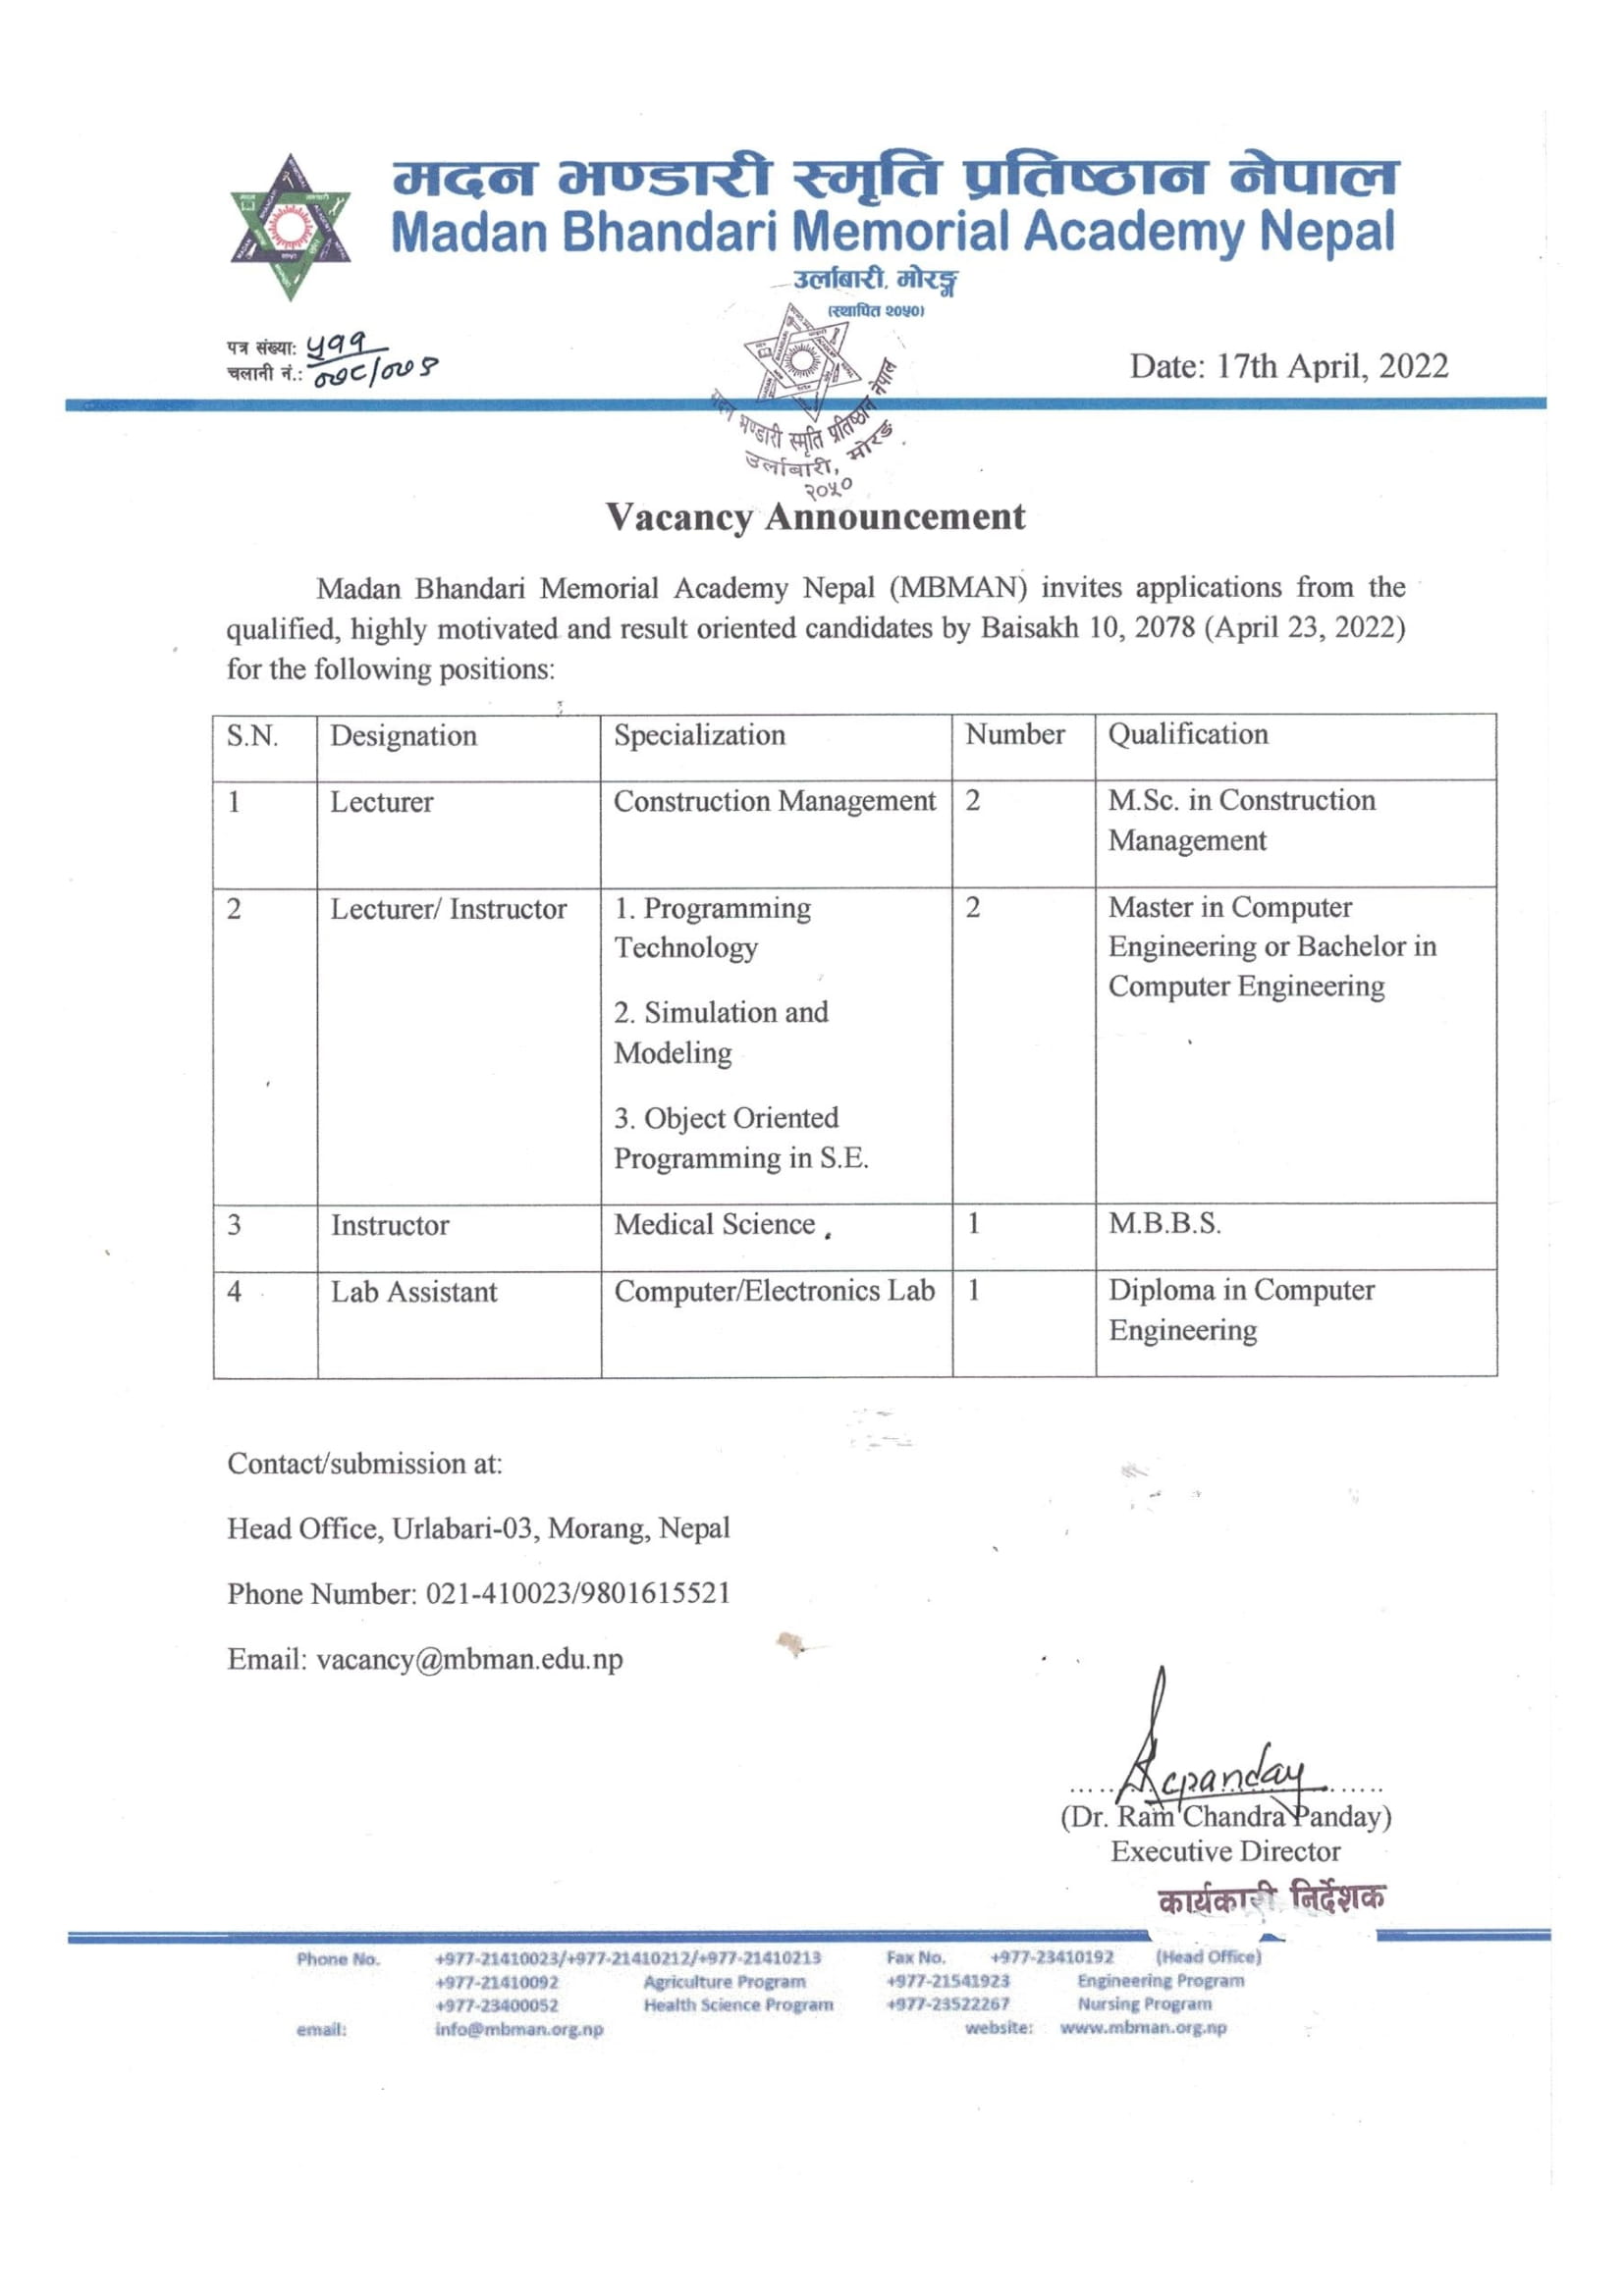 Madan Bhandari Memorial Academy Vacancy